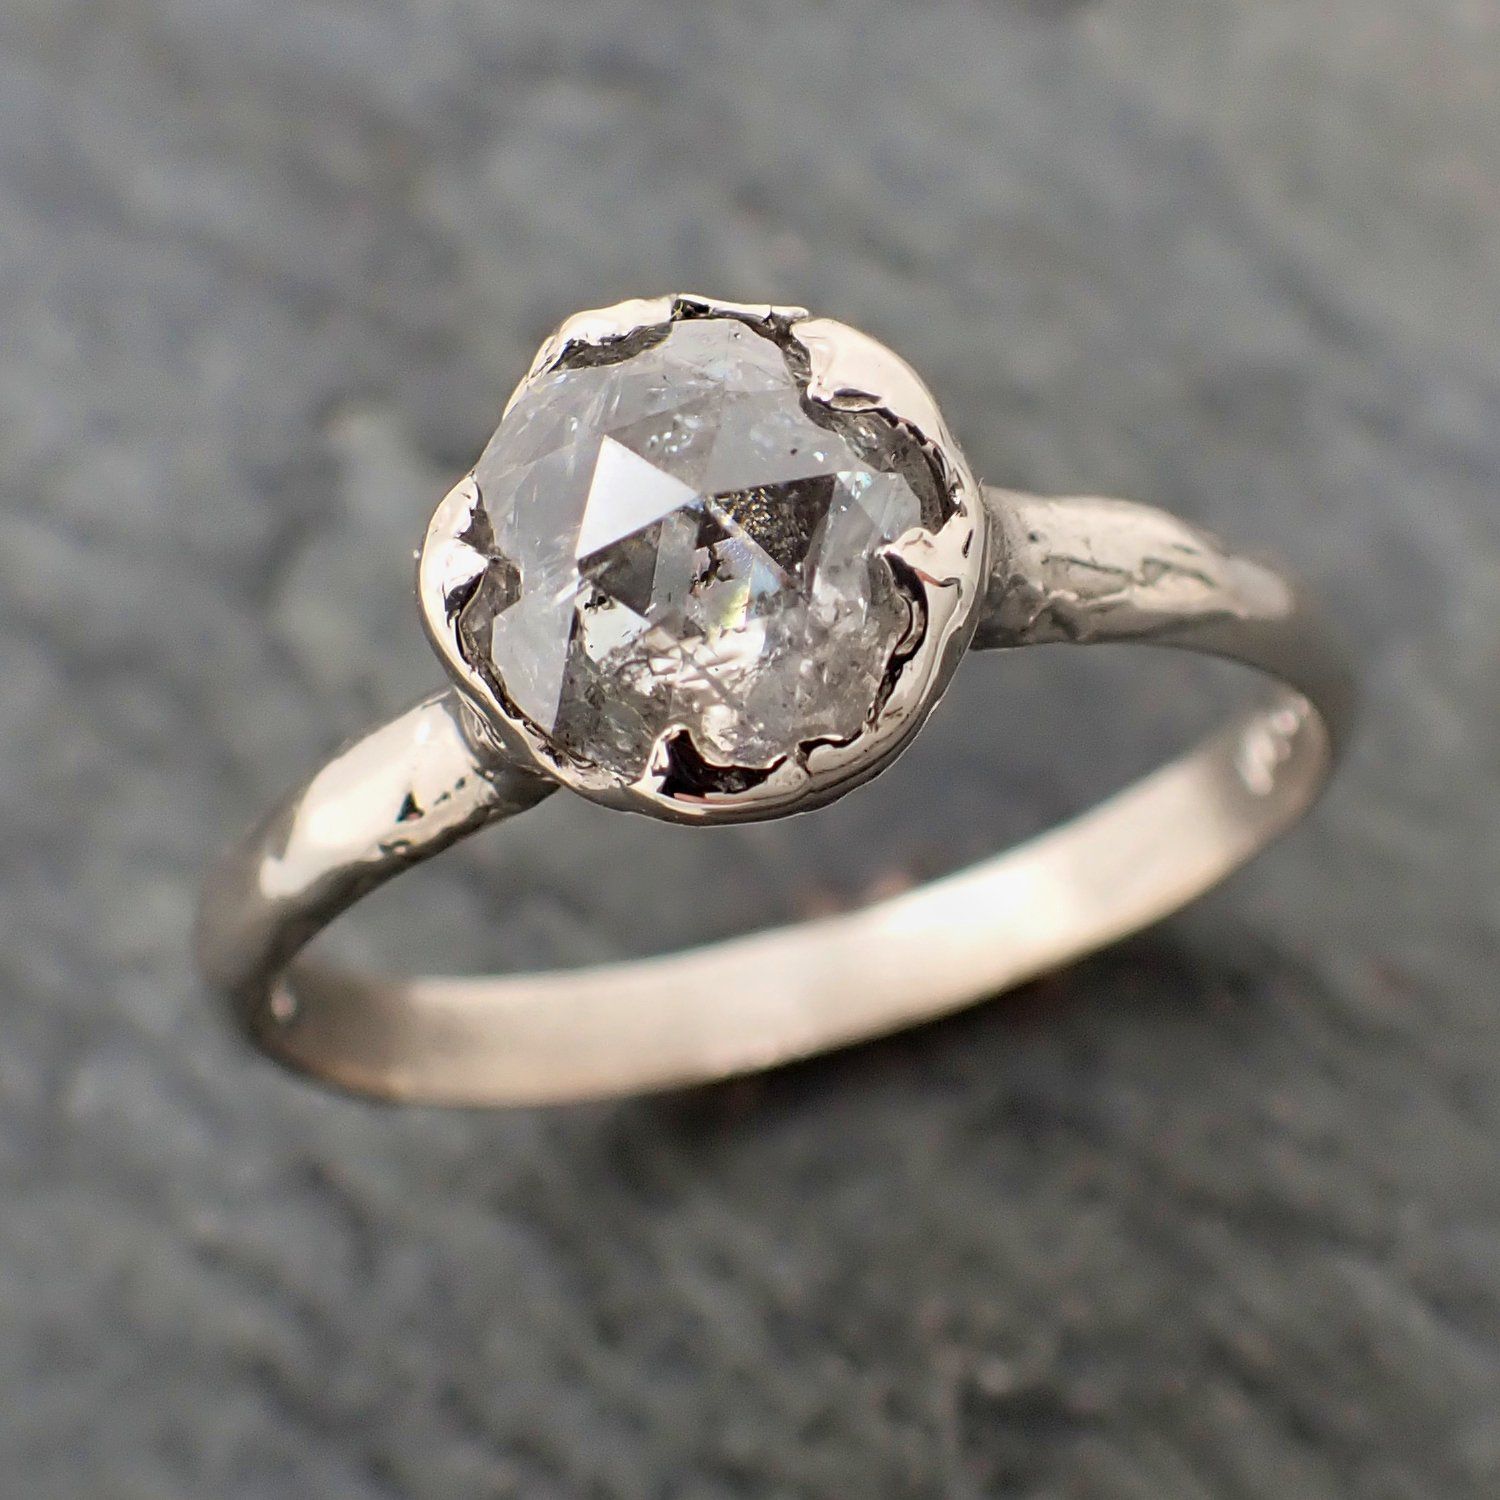 Fancy cut Salt and Pepper Diamond Solitaire Engagement 14k White Gold Wedding Ring Diamond Ring byAngeline 2295